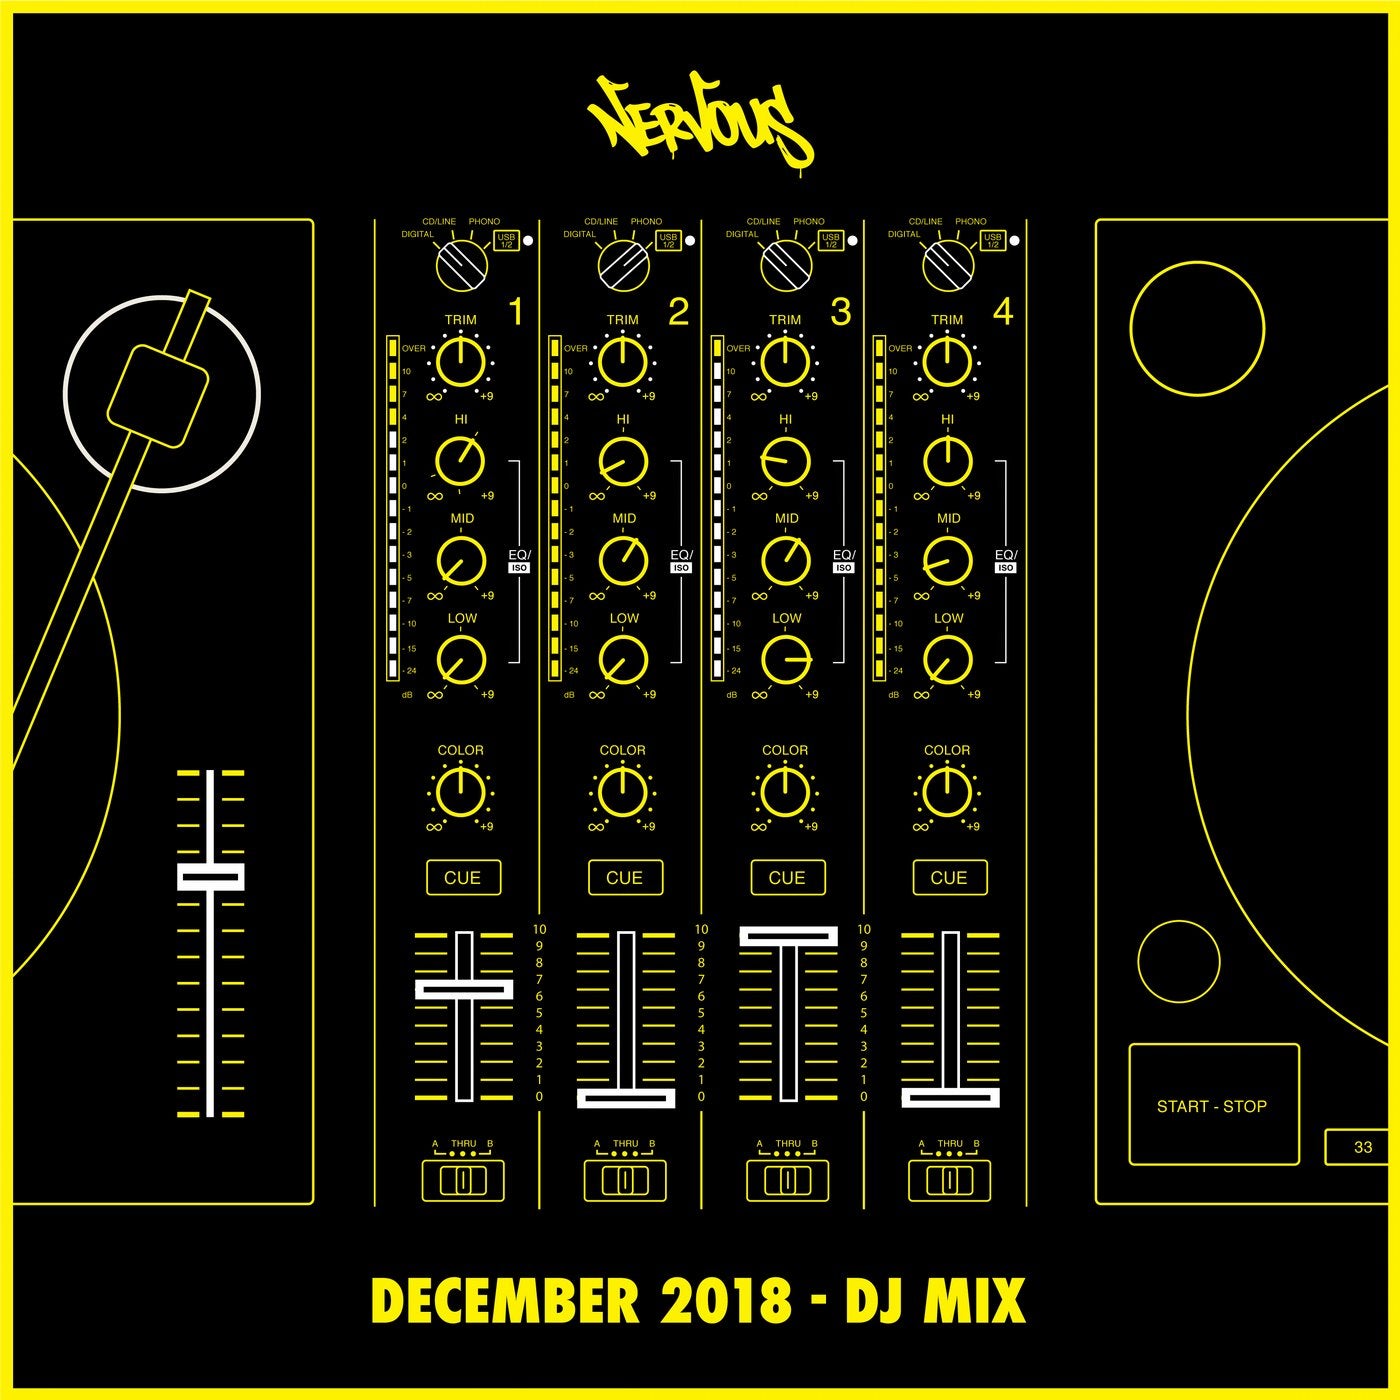 Nervous December 2018 - DJ Mix